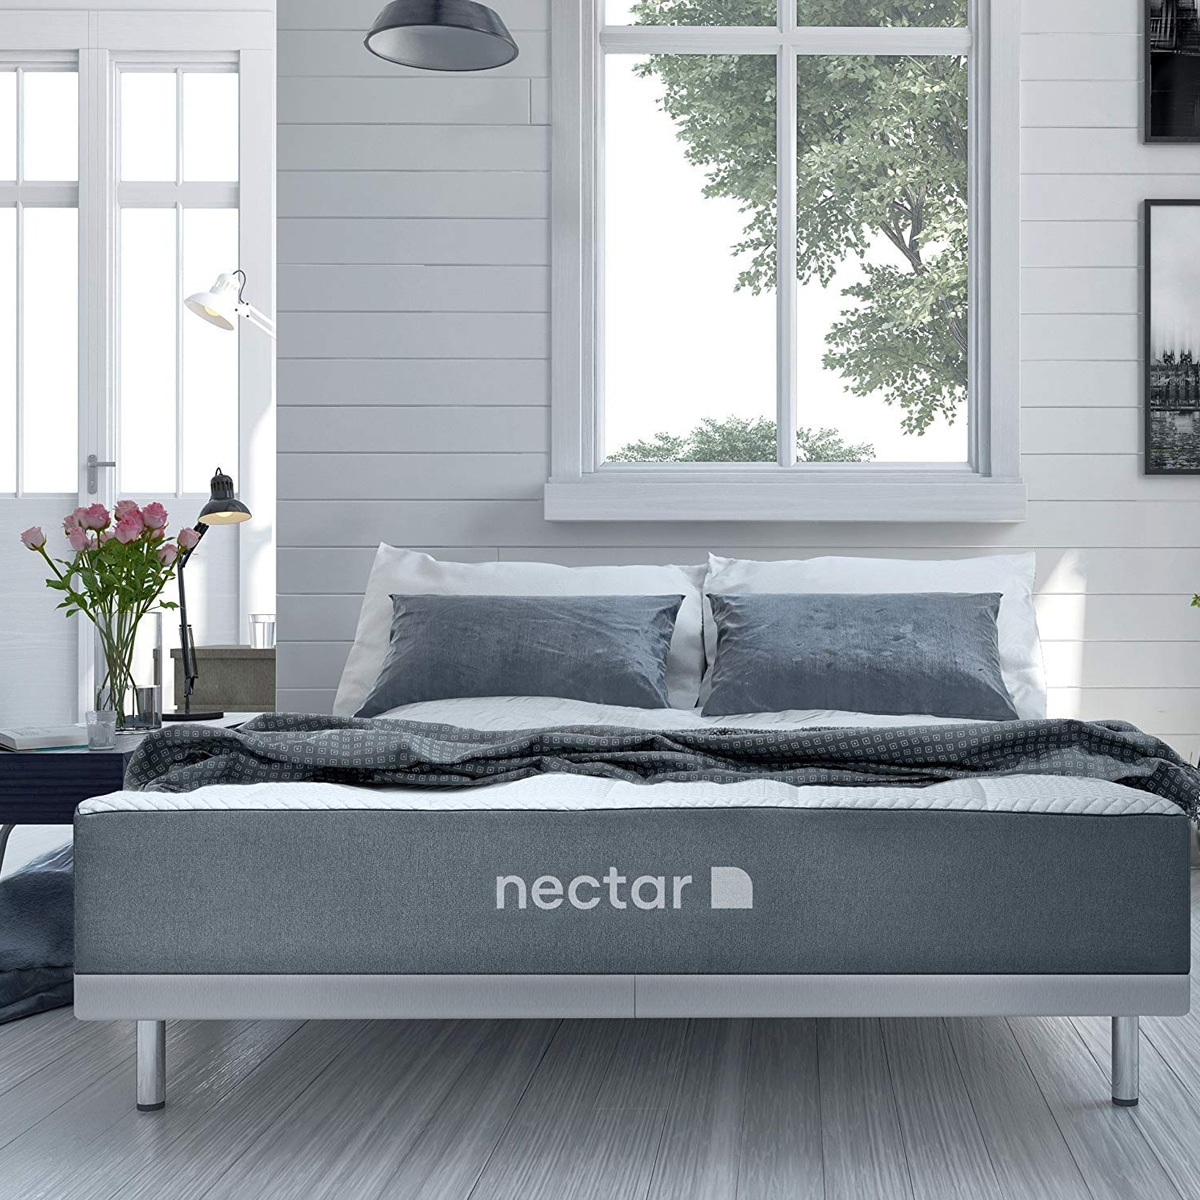 Nectar mattress Lifestyle View